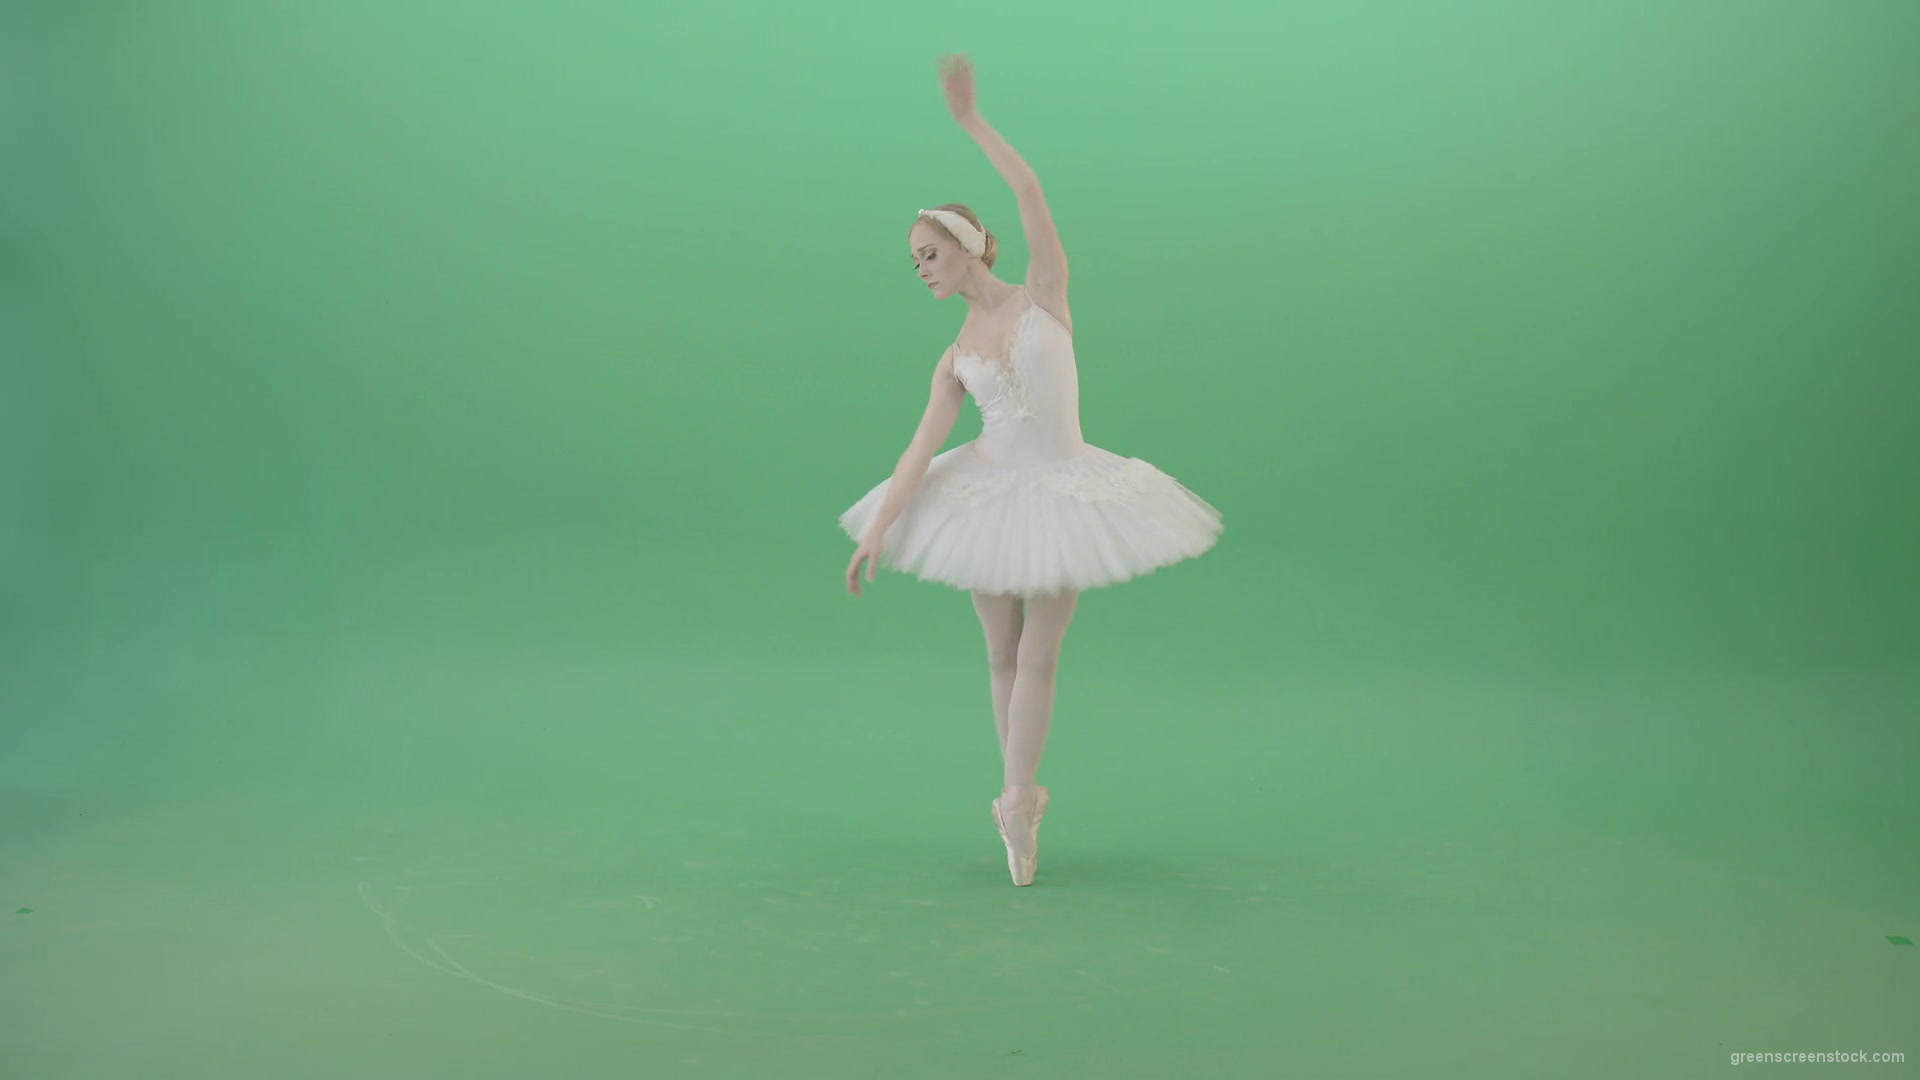 Luxury-Vienna-Opera-Ballet-Girl-has-a-PSY-Flight-on-Green-Screen-4K-Video-Footage-1920_004 Green Screen Stock